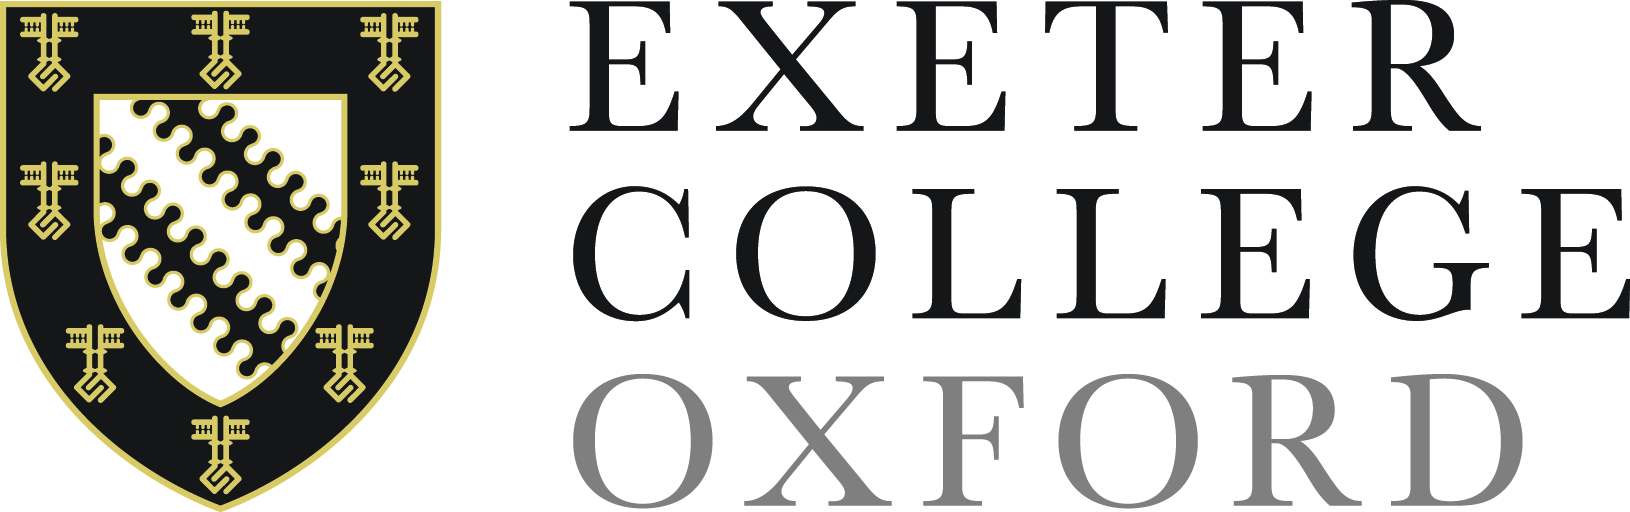 Sister college. Эксетер-колледж. Exeter College Oxford. Оксфордском колледже Эксетер Толкиен. Эксетерский колледж 1800.